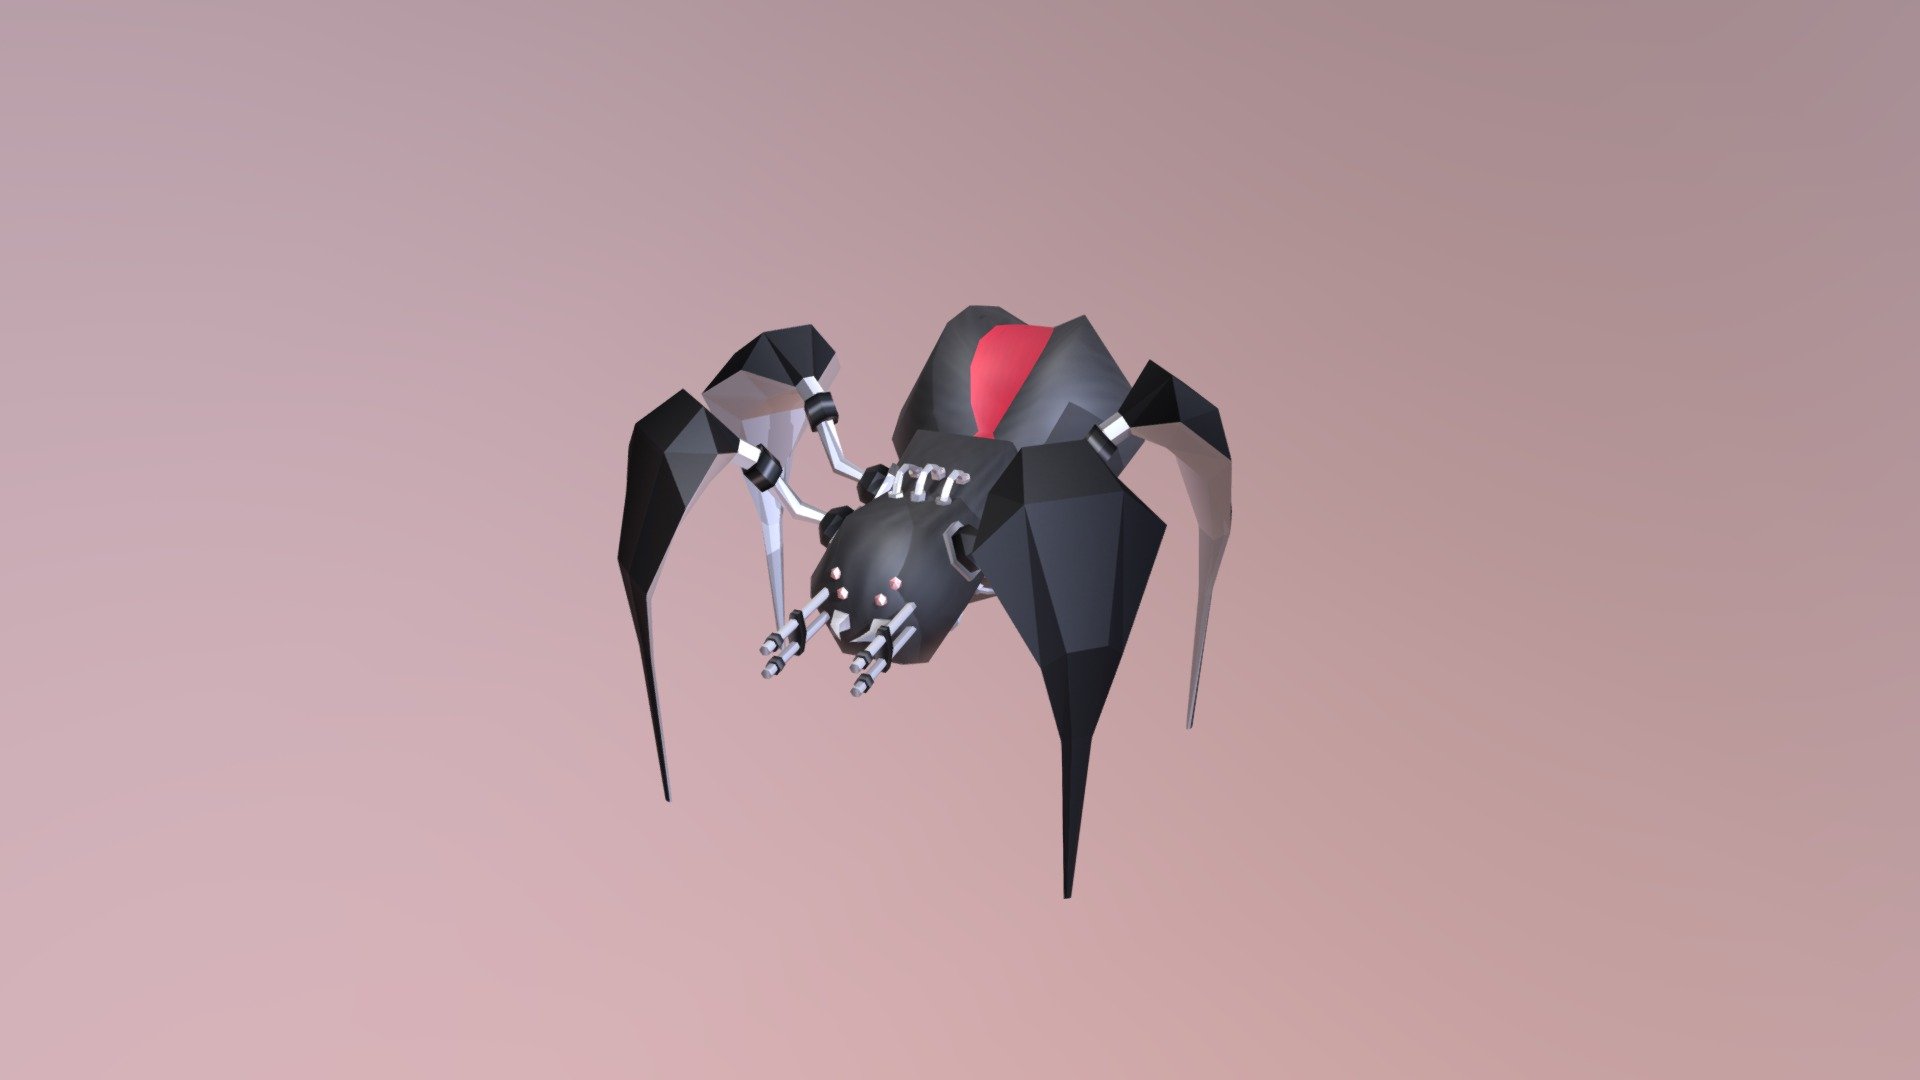 Aranha Robô/ Robot Spider